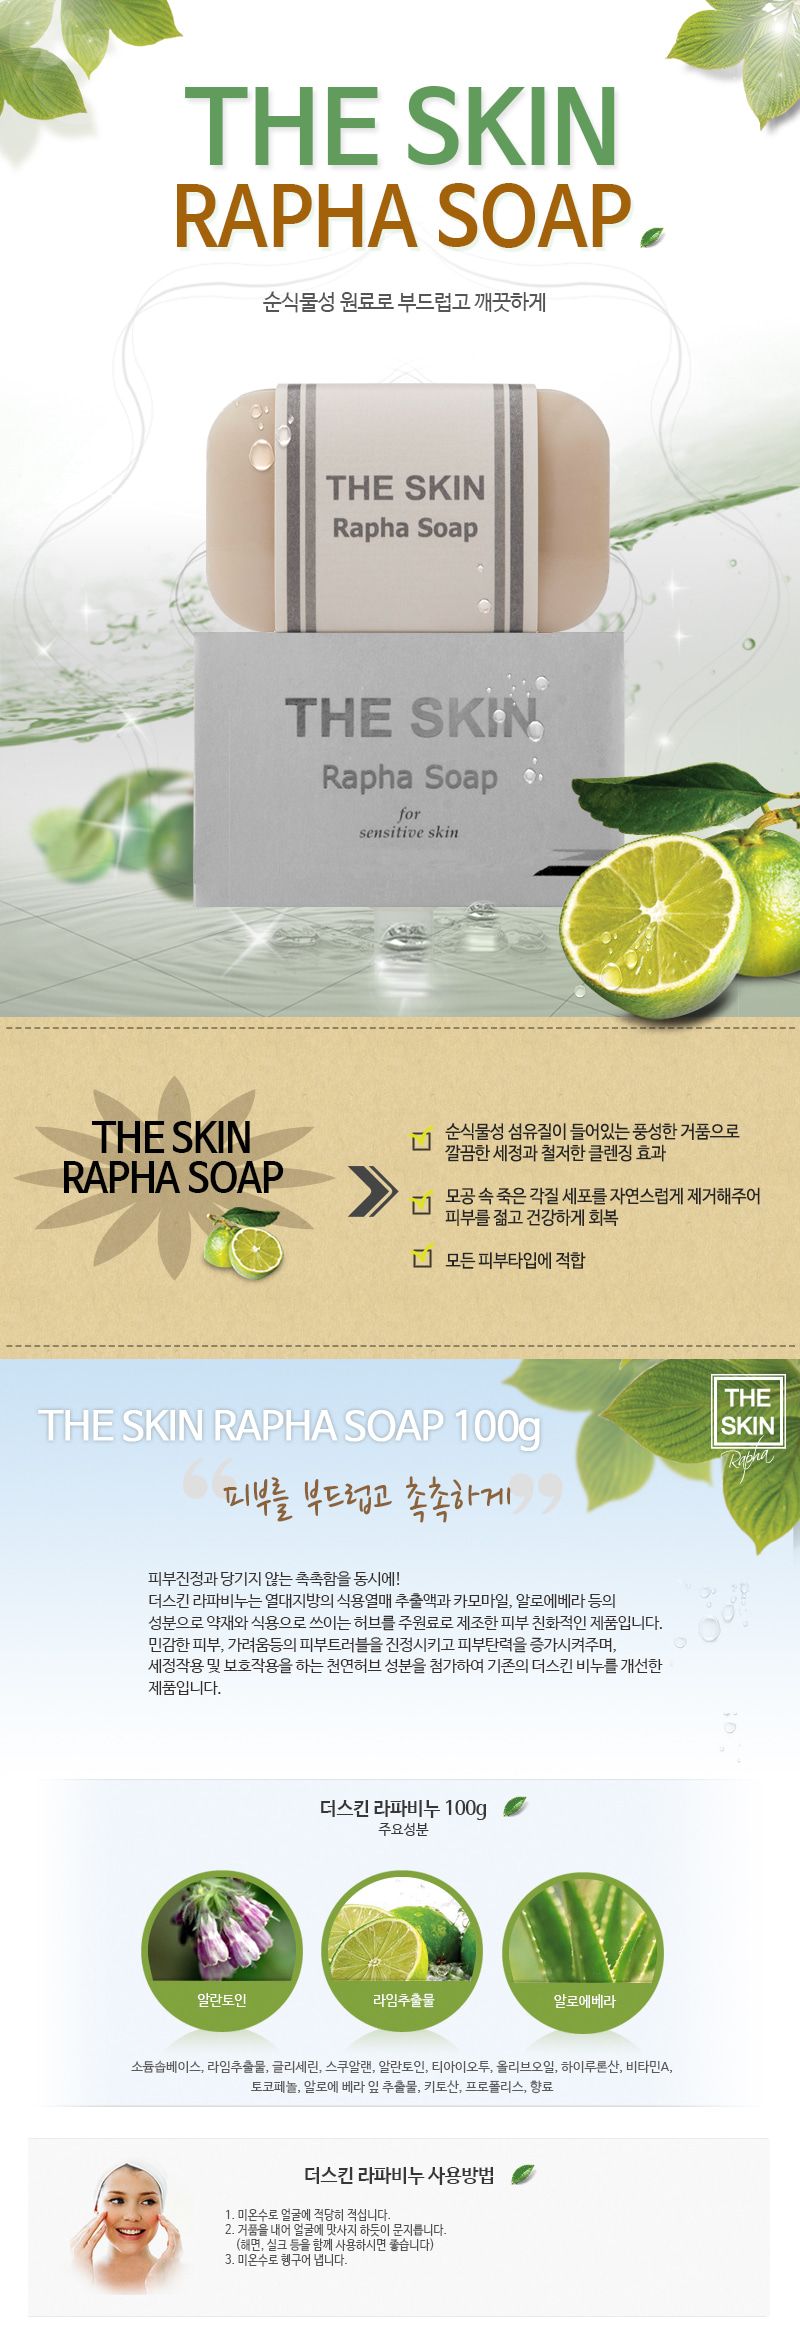 copy-1504861848-Rapha_soap.jpg